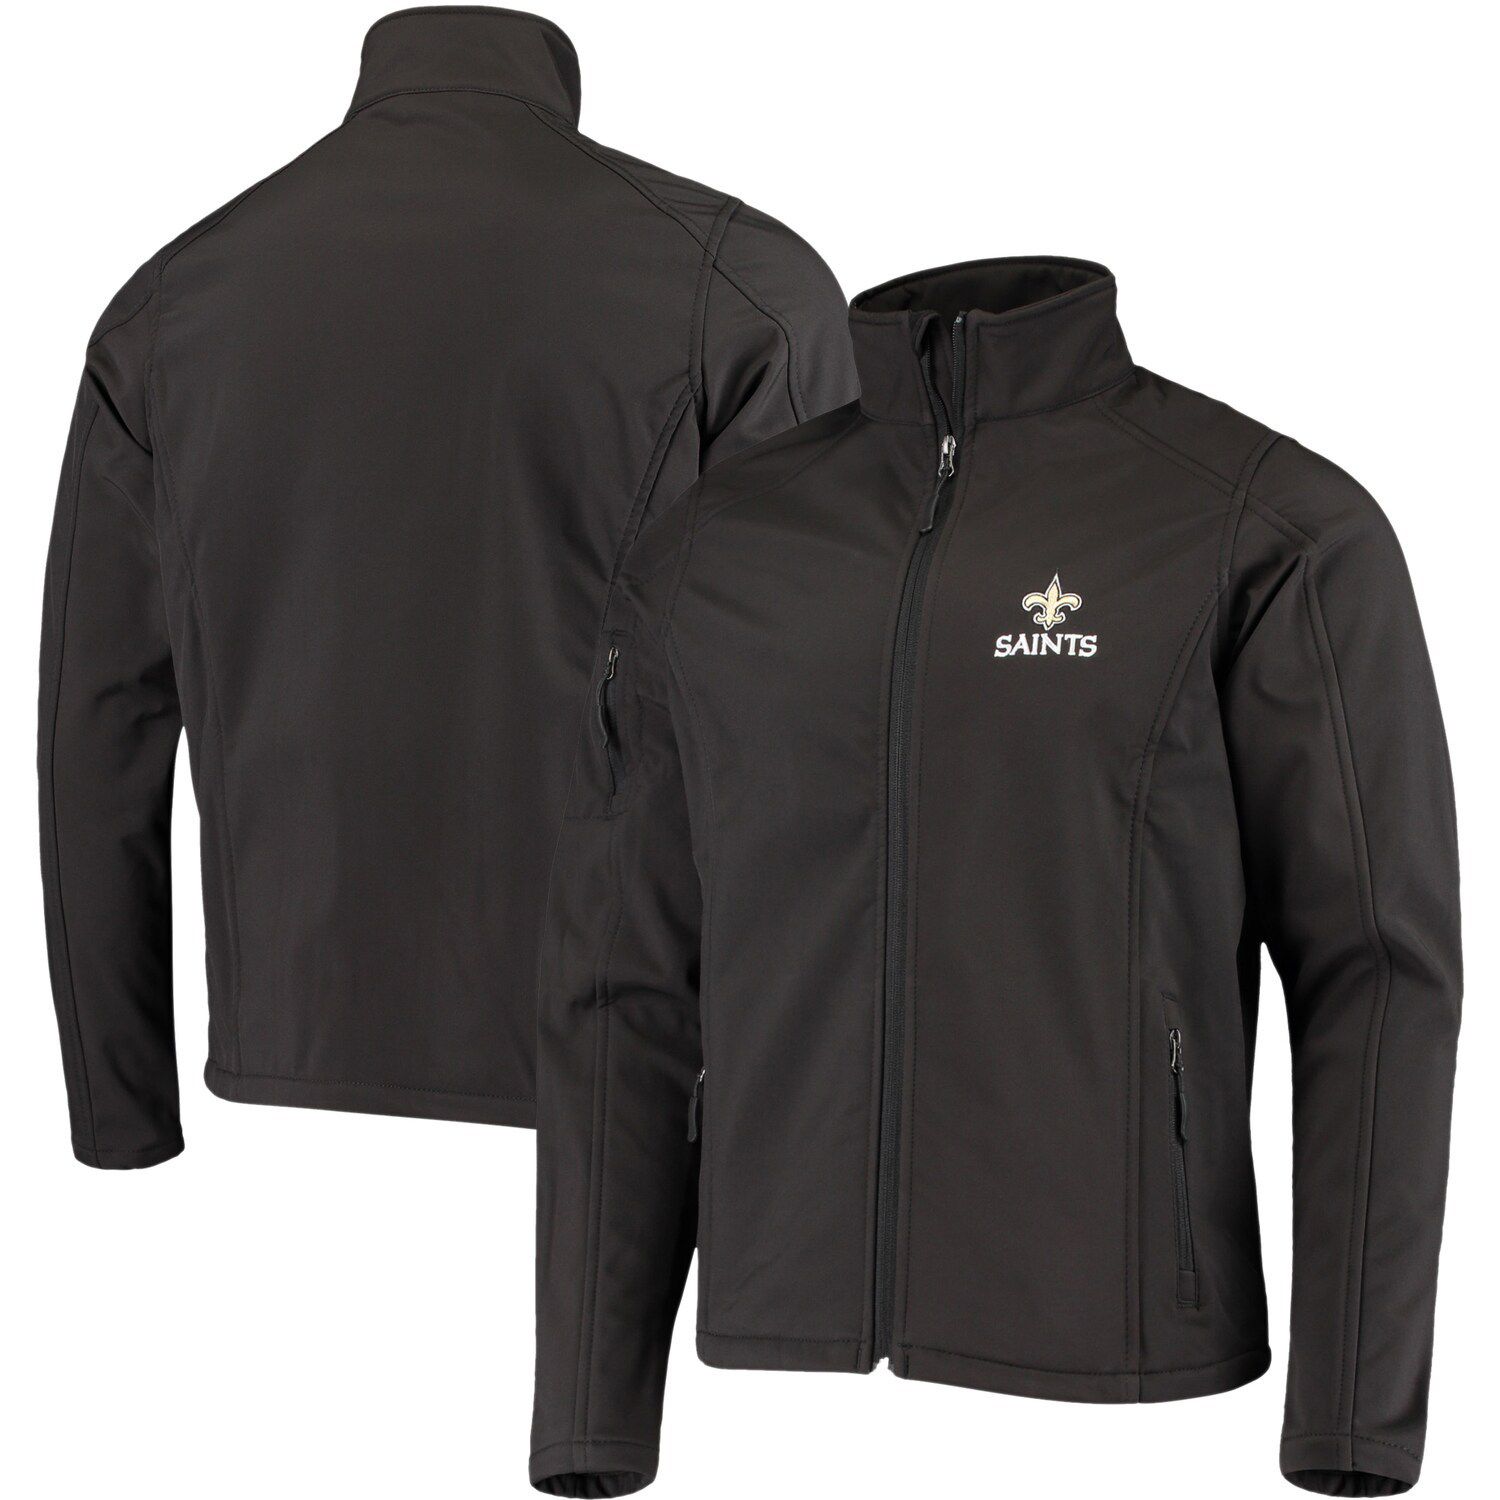 Image for Unbranded Men's Dunbrooke Black New Orleans Saints Sonoma Softshell Full-Zip Jacket at Kohl's.